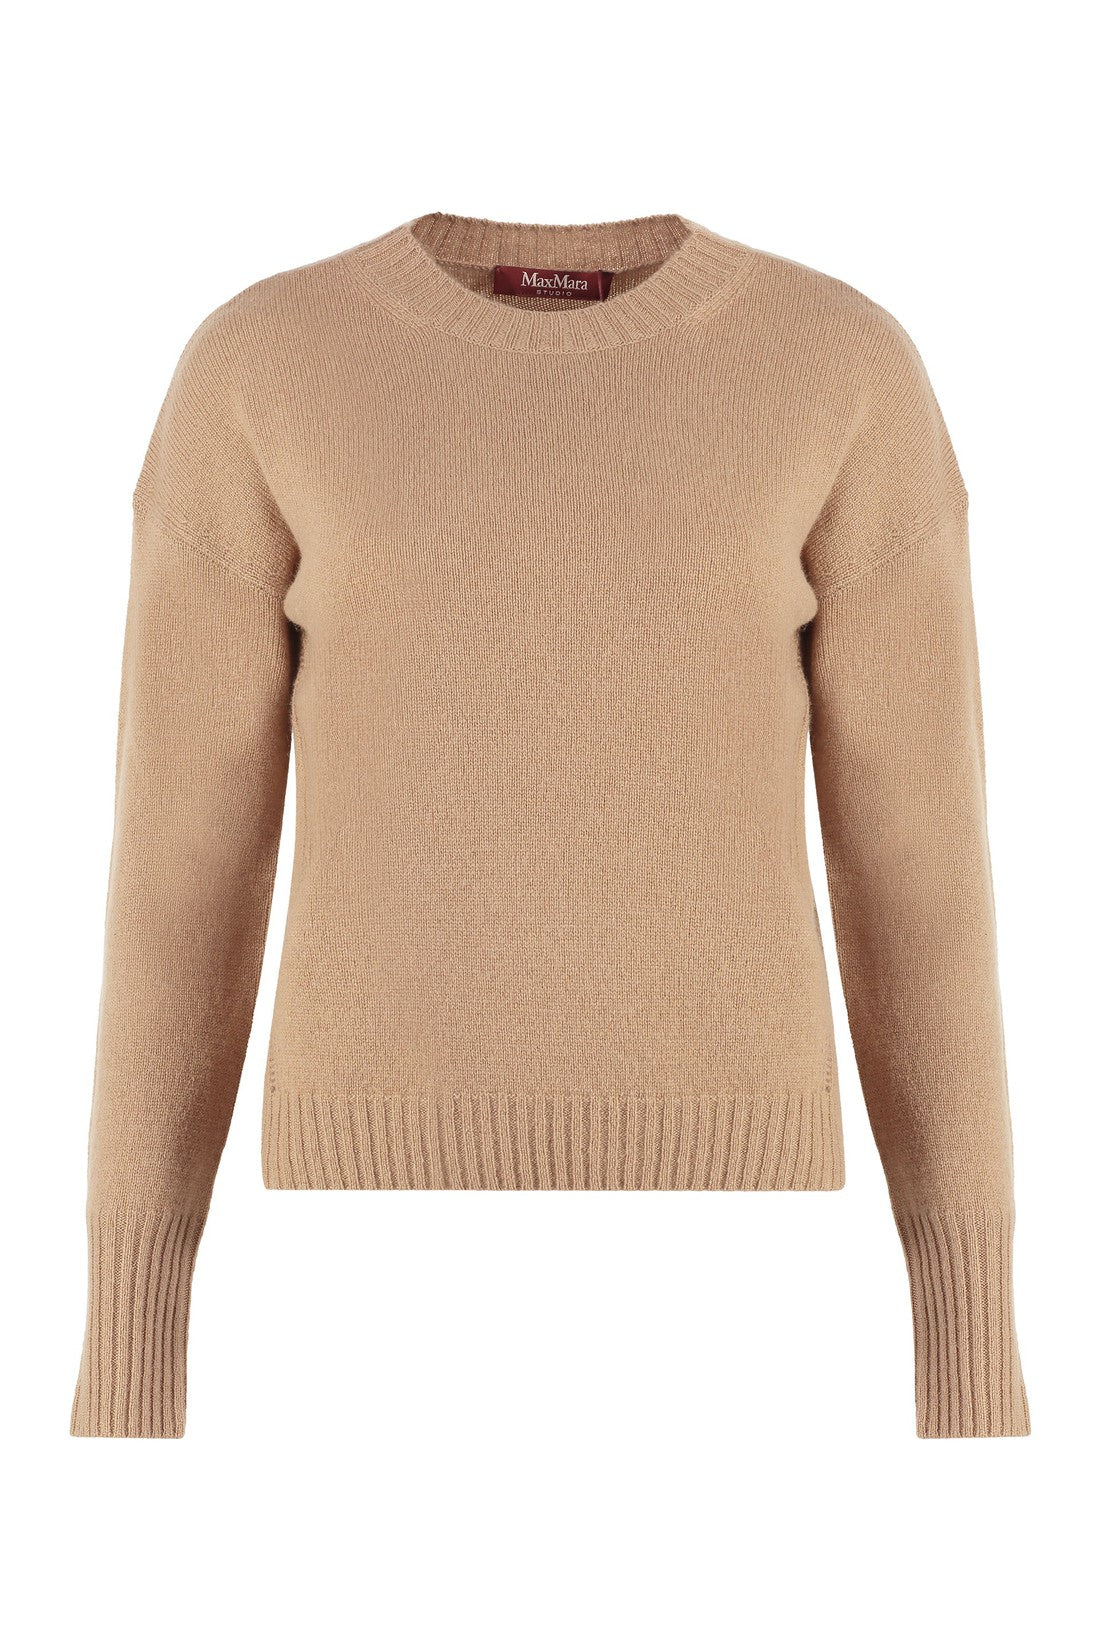 Max Mara Studio-OUTLET-SALE-Alinda Cashmere sweater-ARCHIVIST